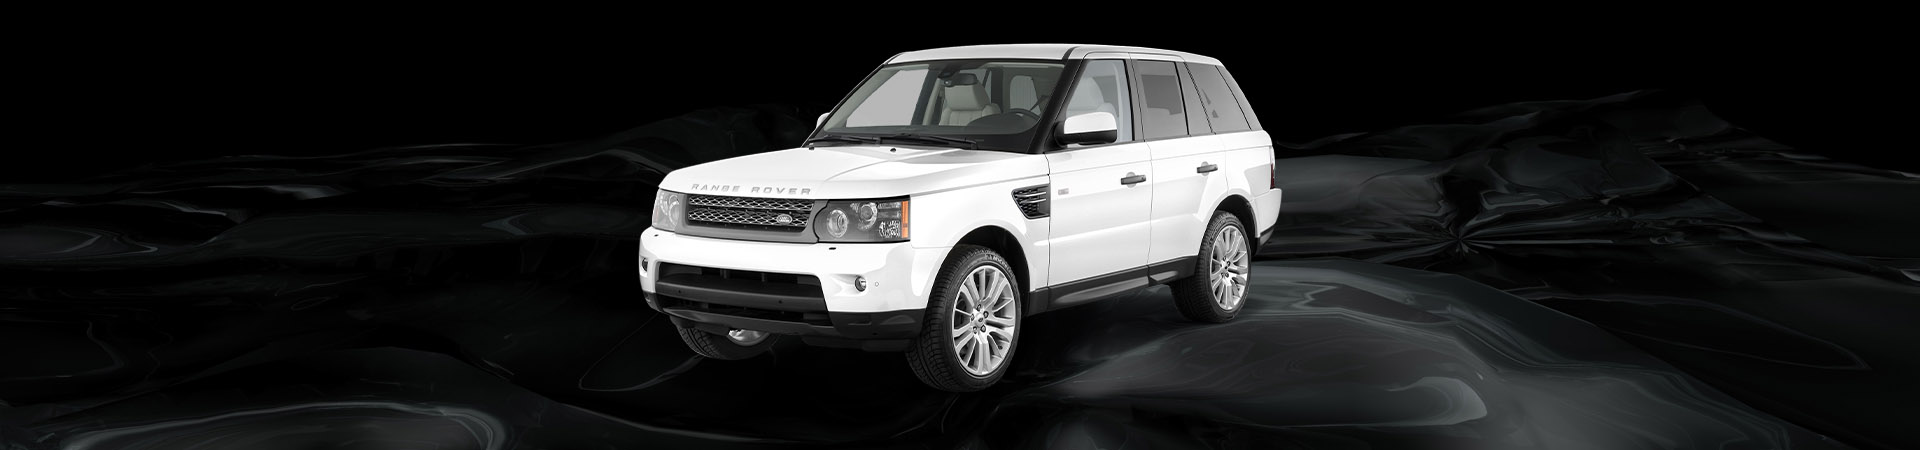  | Otkup Land Rover automobila